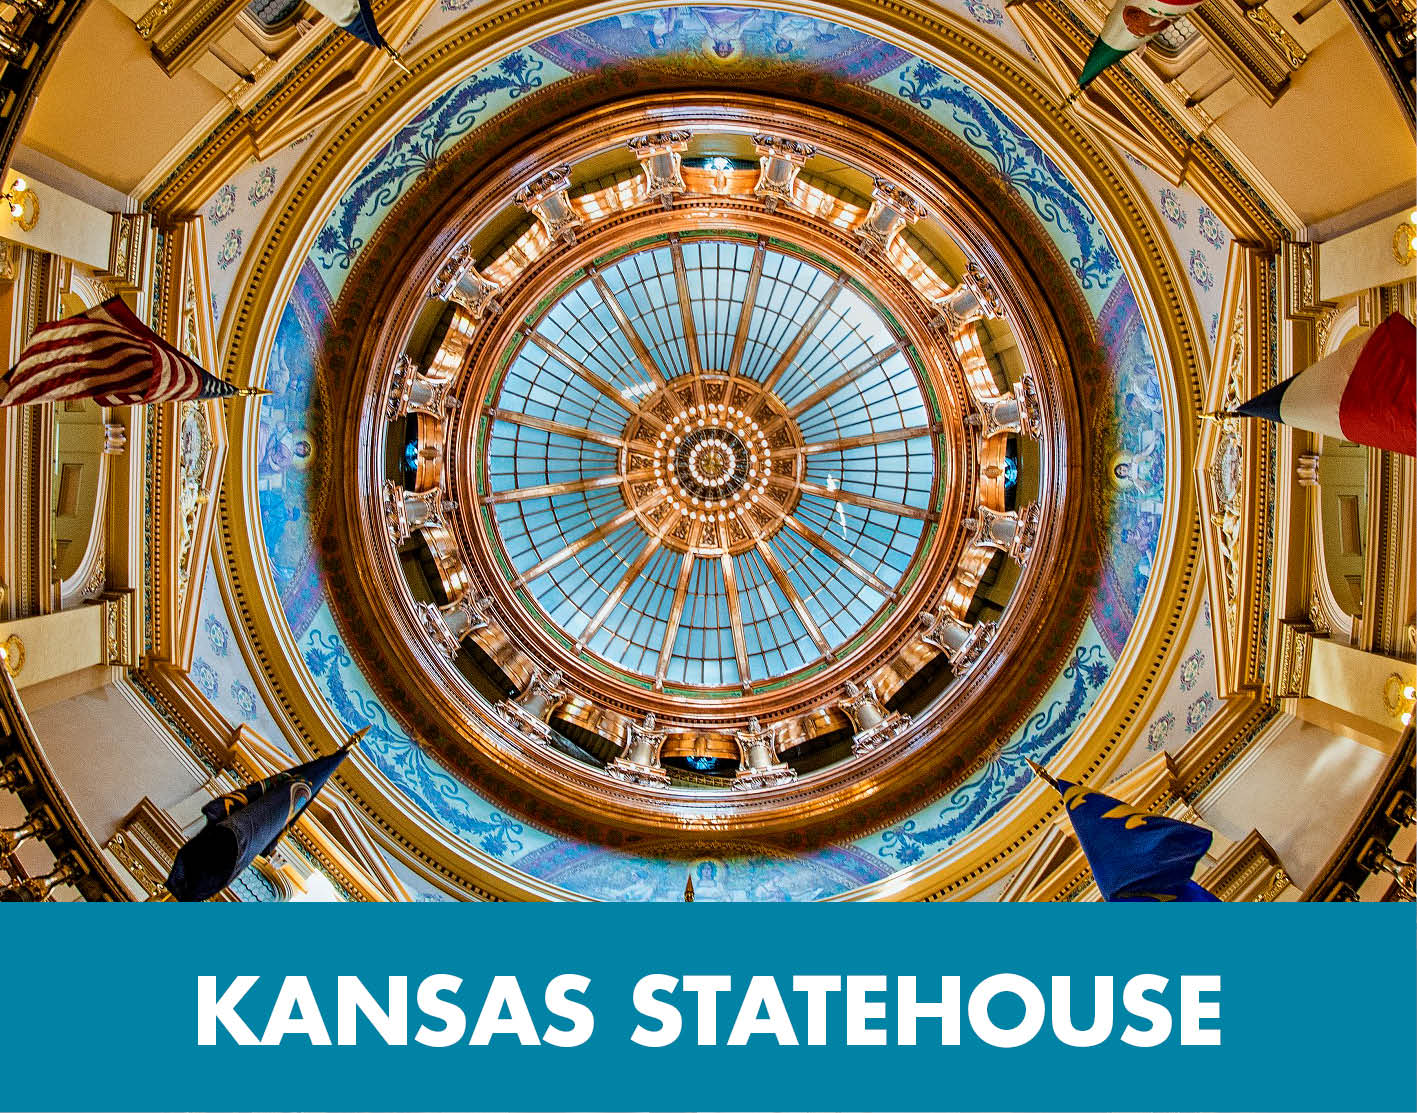 Kansas statehouse tile